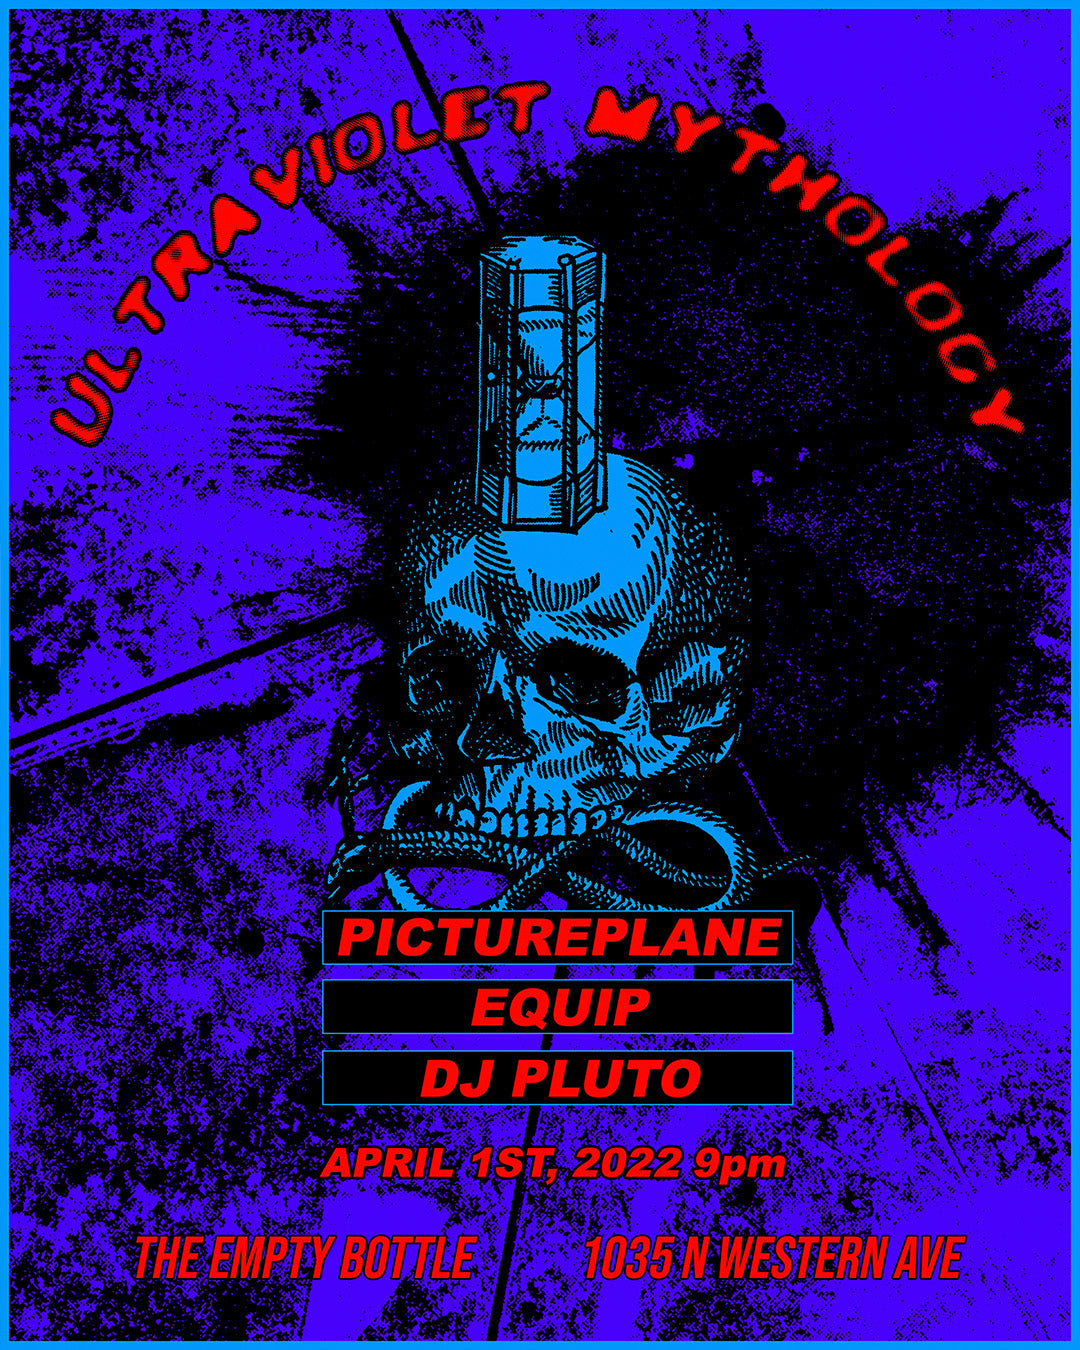 Pictureplane Equip DJ Pluto